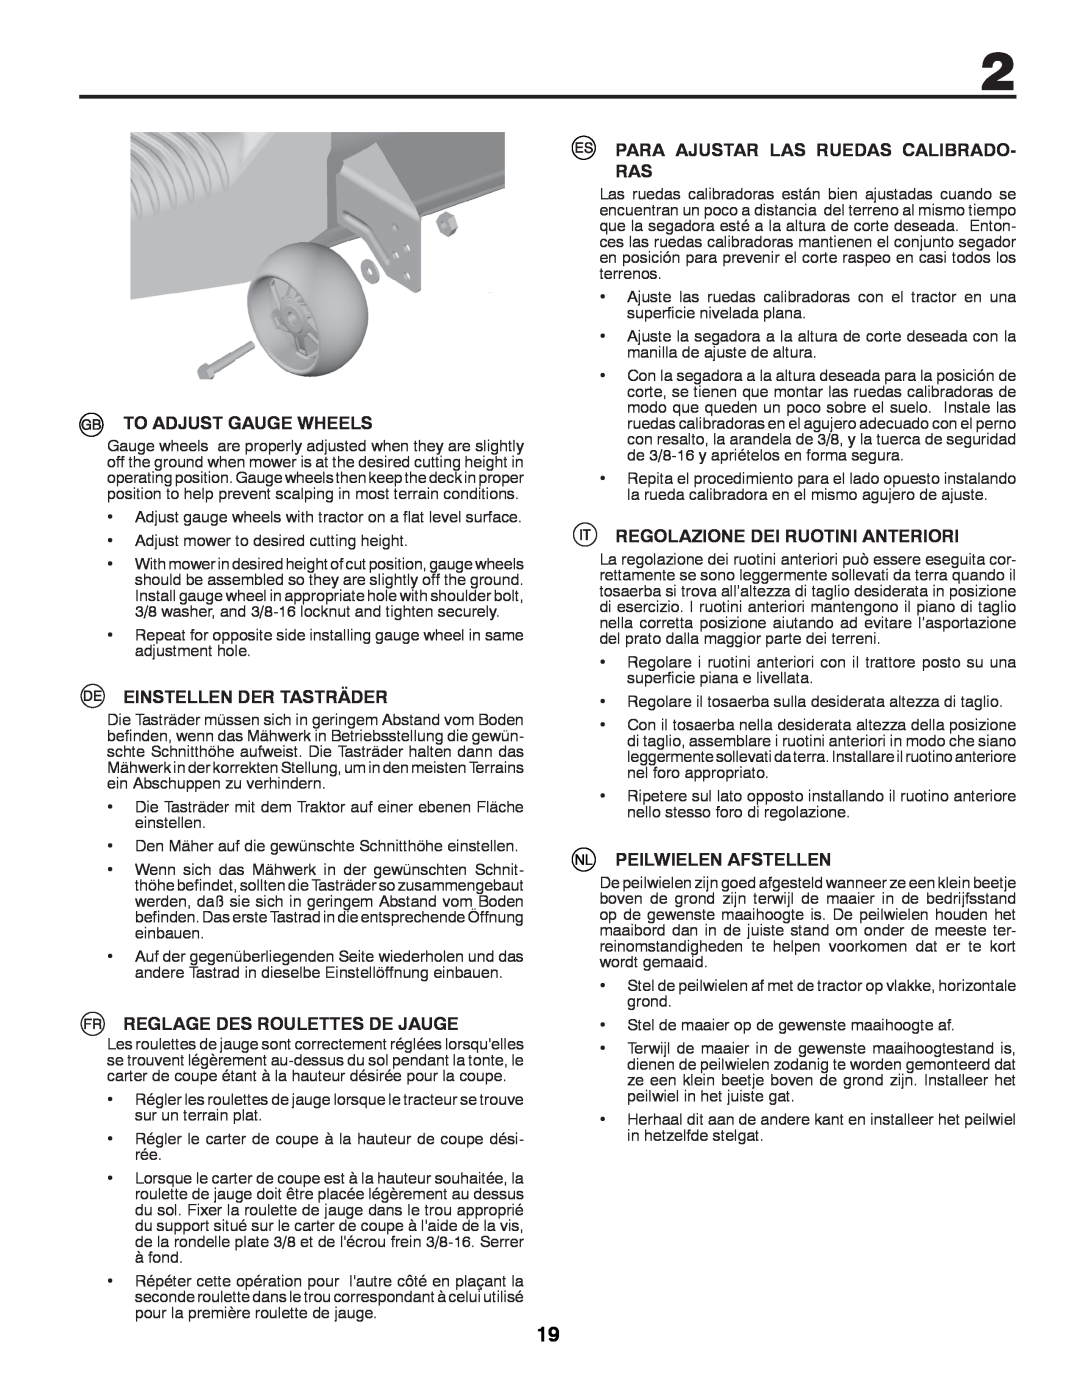 Husqvarna GTH260TWIN instruction manual To Adjust Gauge Wheels, Einstellen Der Tasträder, Reglage Des Roulettes De Jauge 